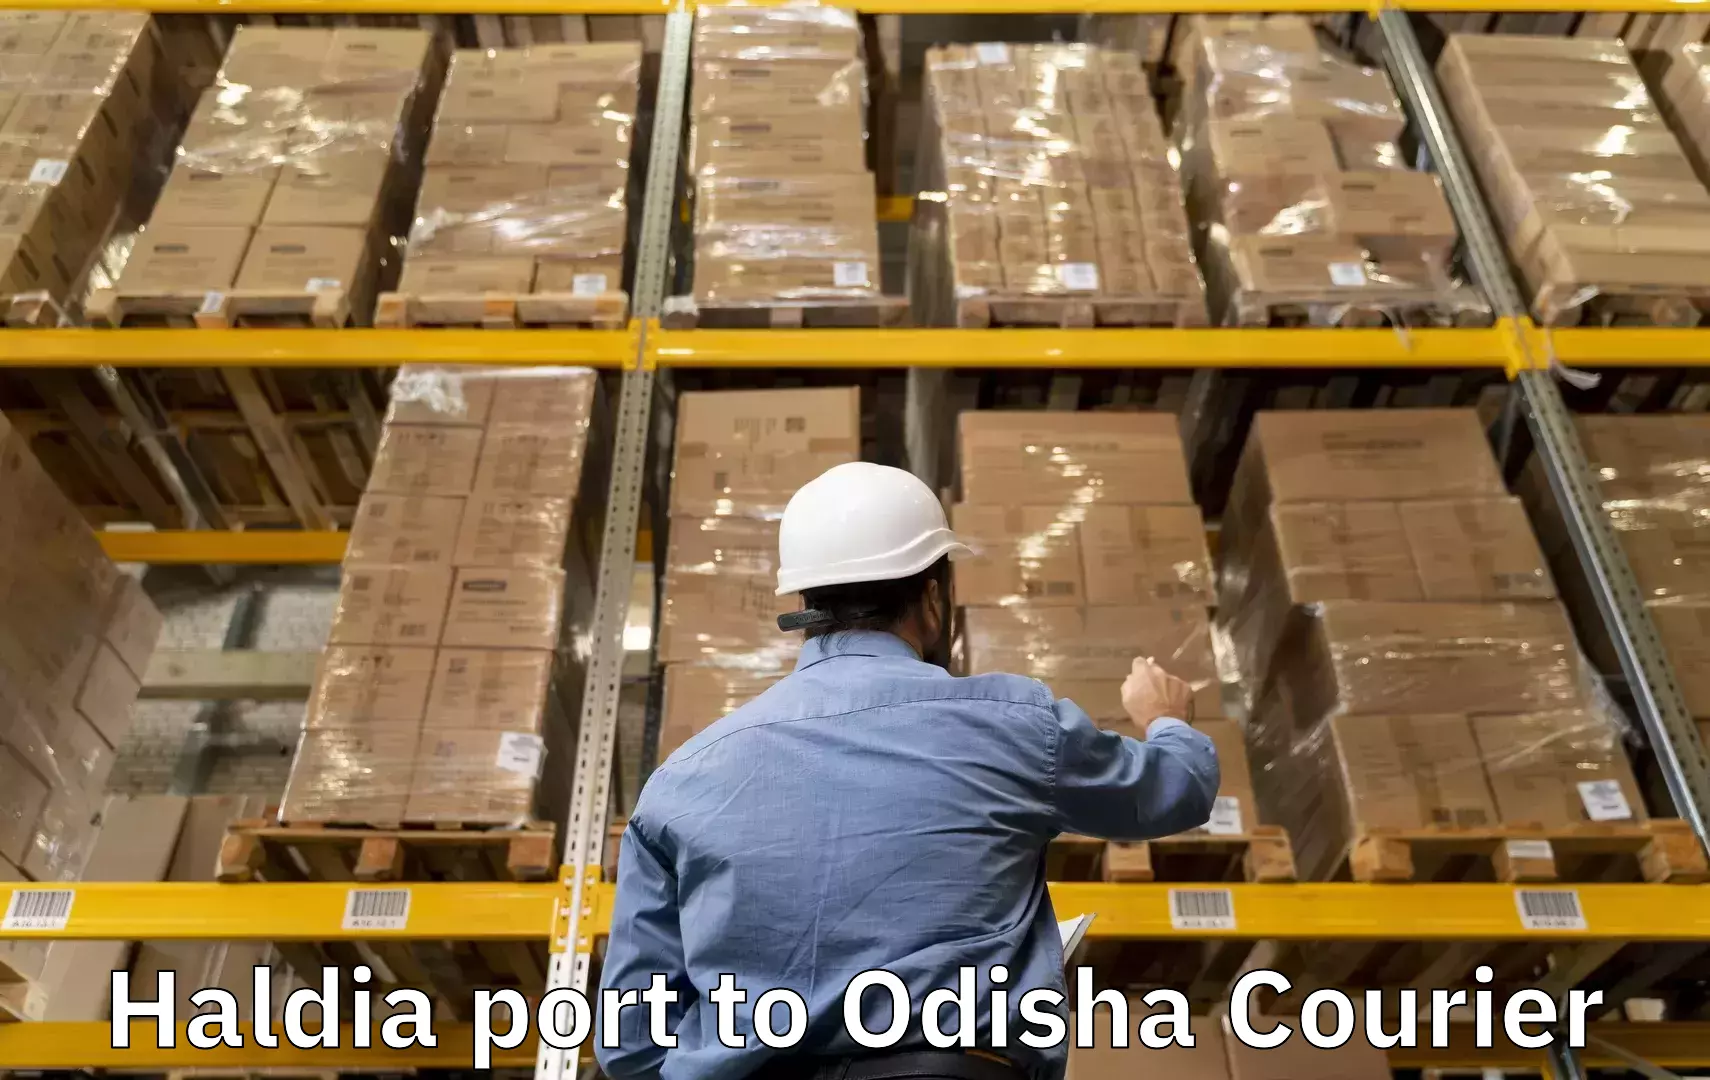 Reliable luggage courier Haldia port to Odisha